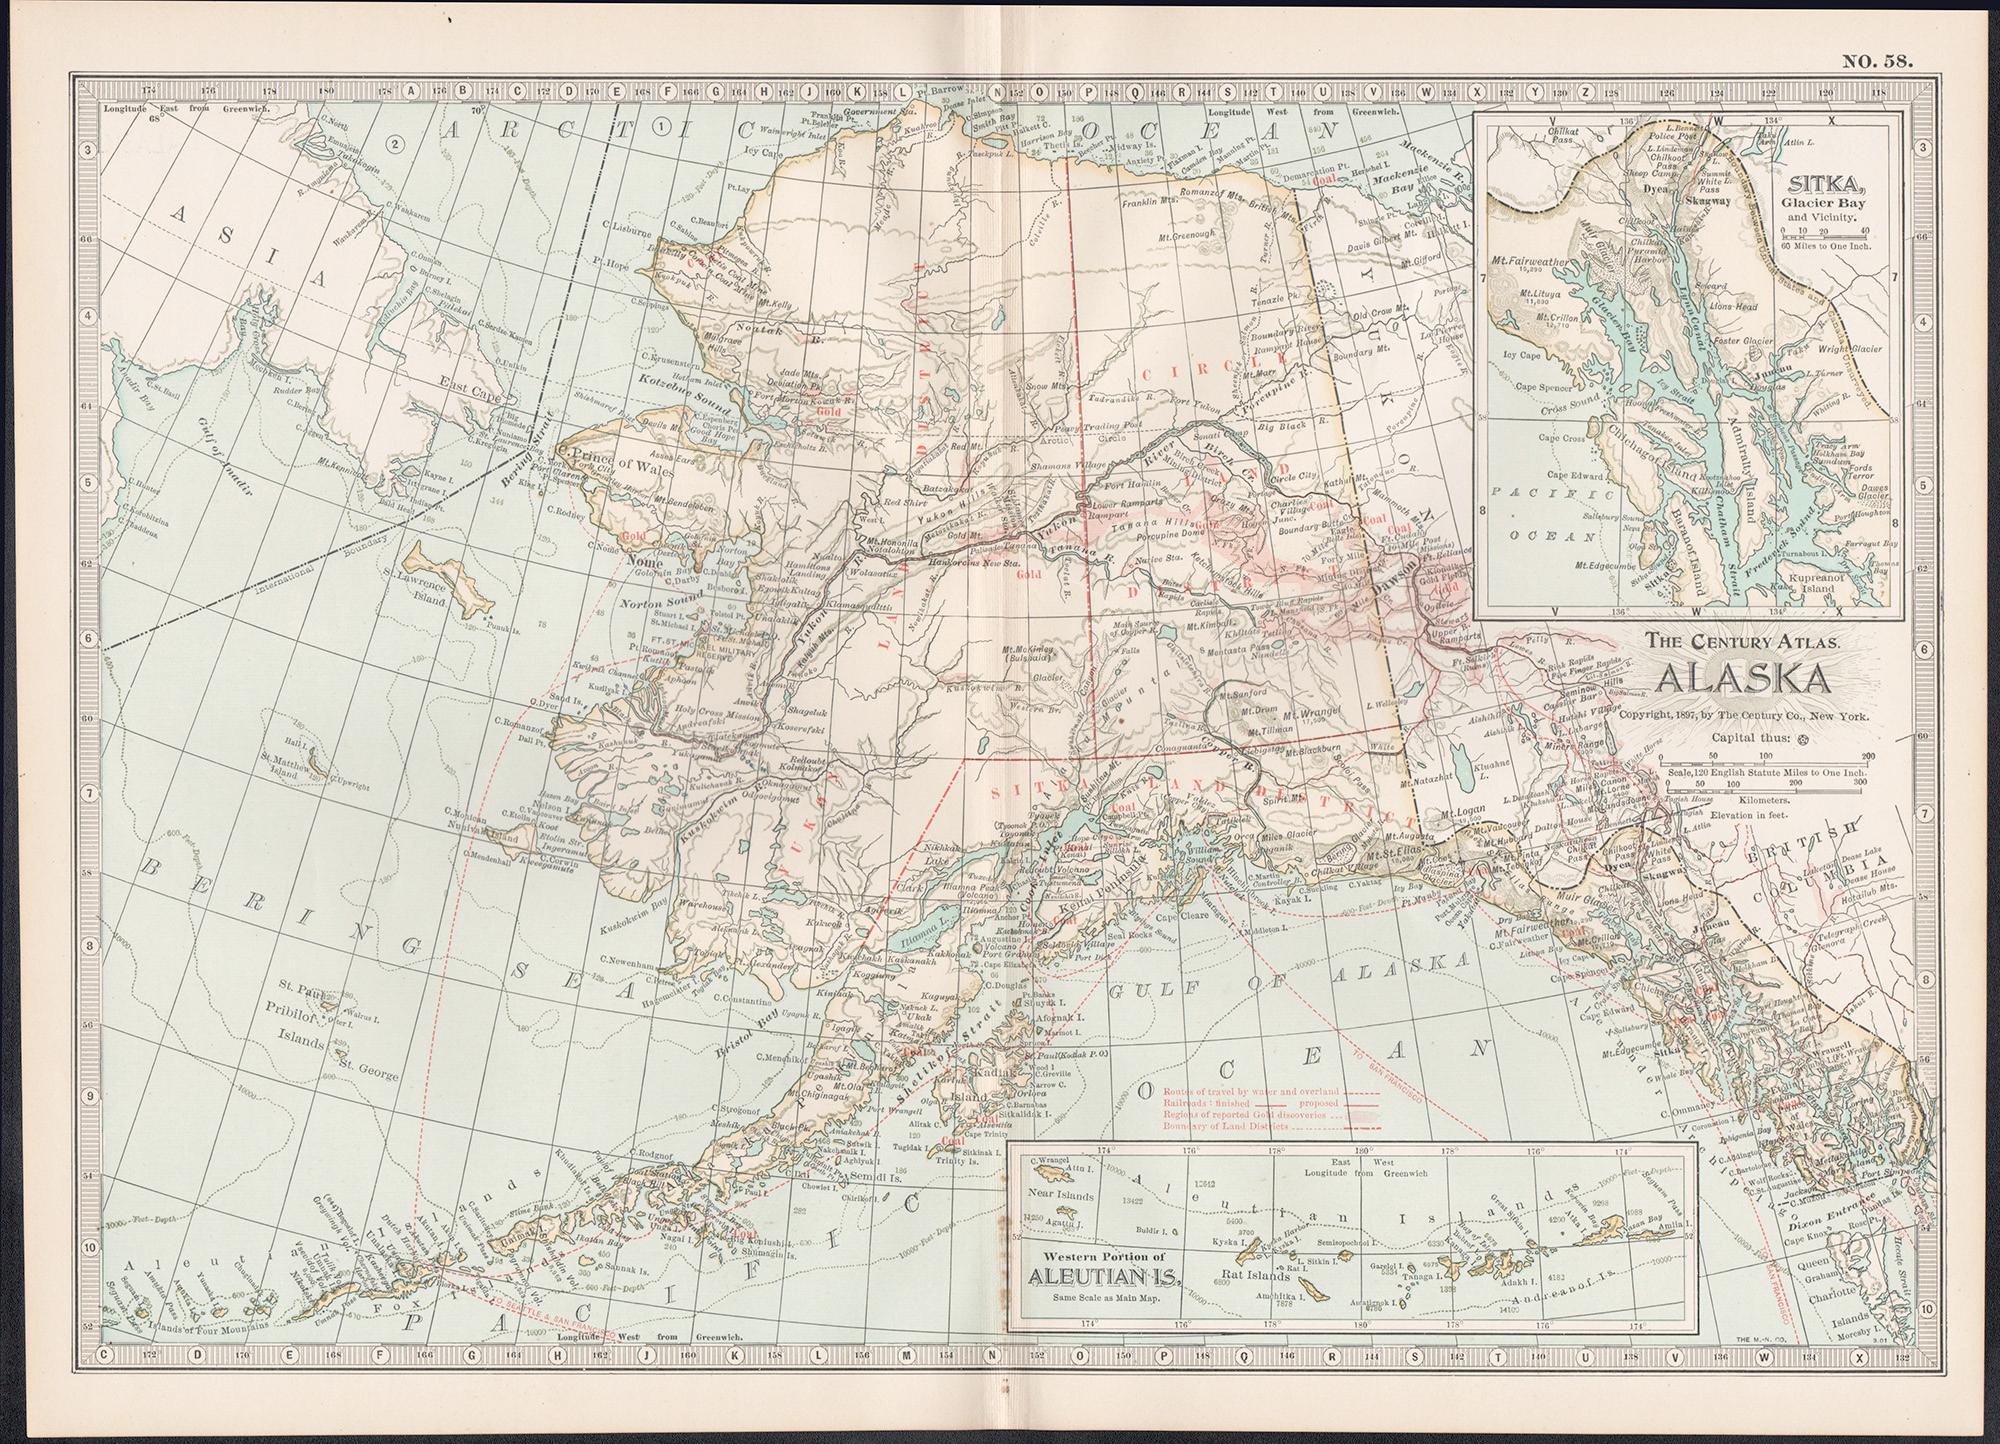 Alaska, North America. Century Atlas antique vintage map - Print by Unknown